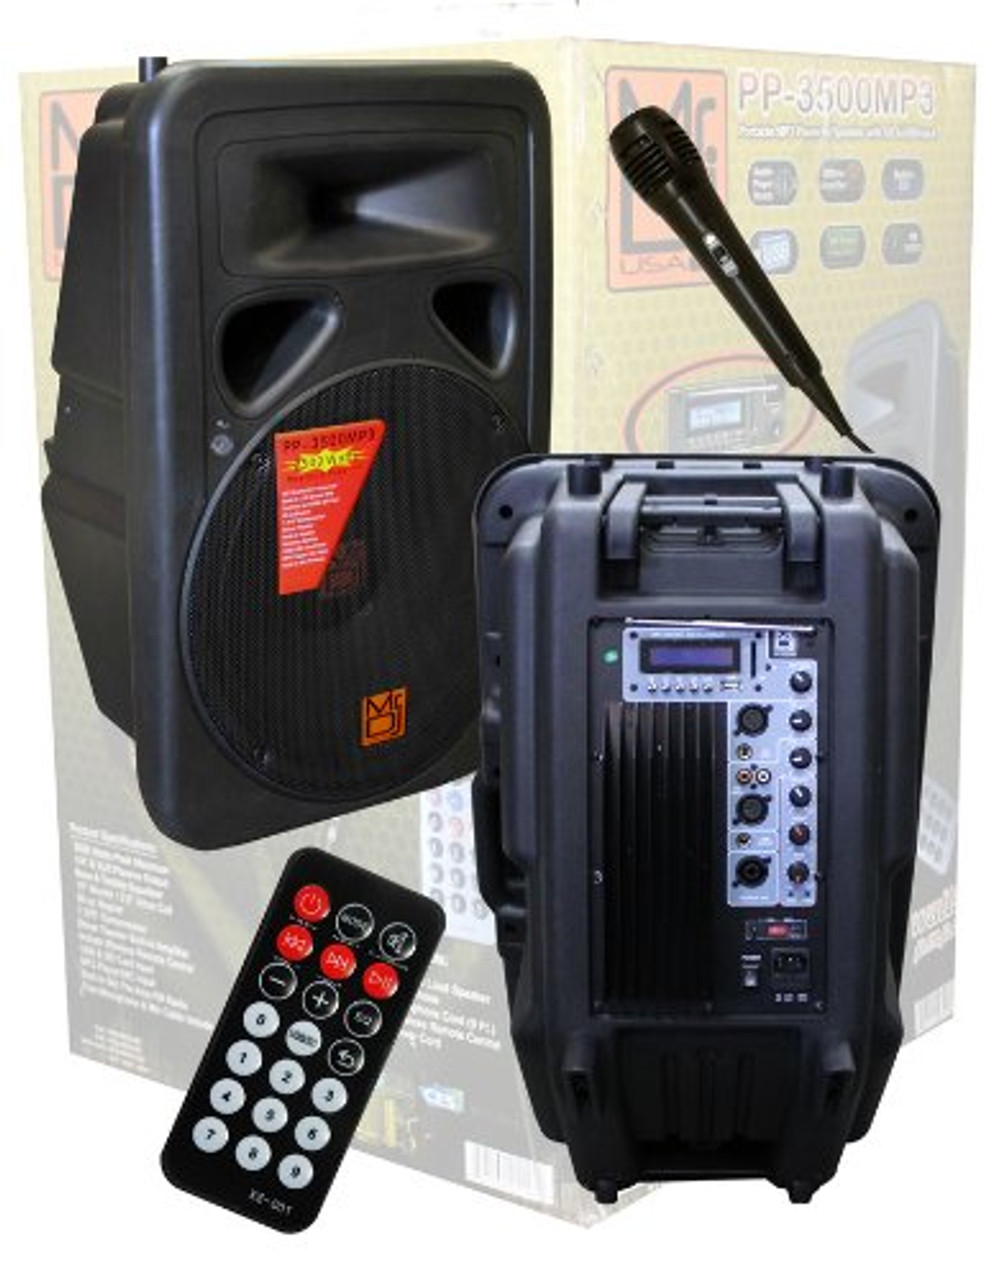 MR DJ PP3500MP3 2-WAY 15" ACTIVE FULL RANGE SPEAKER W/ BUILT IN MP3 PLAYER, FM RADIO, FREE MICROPHONE